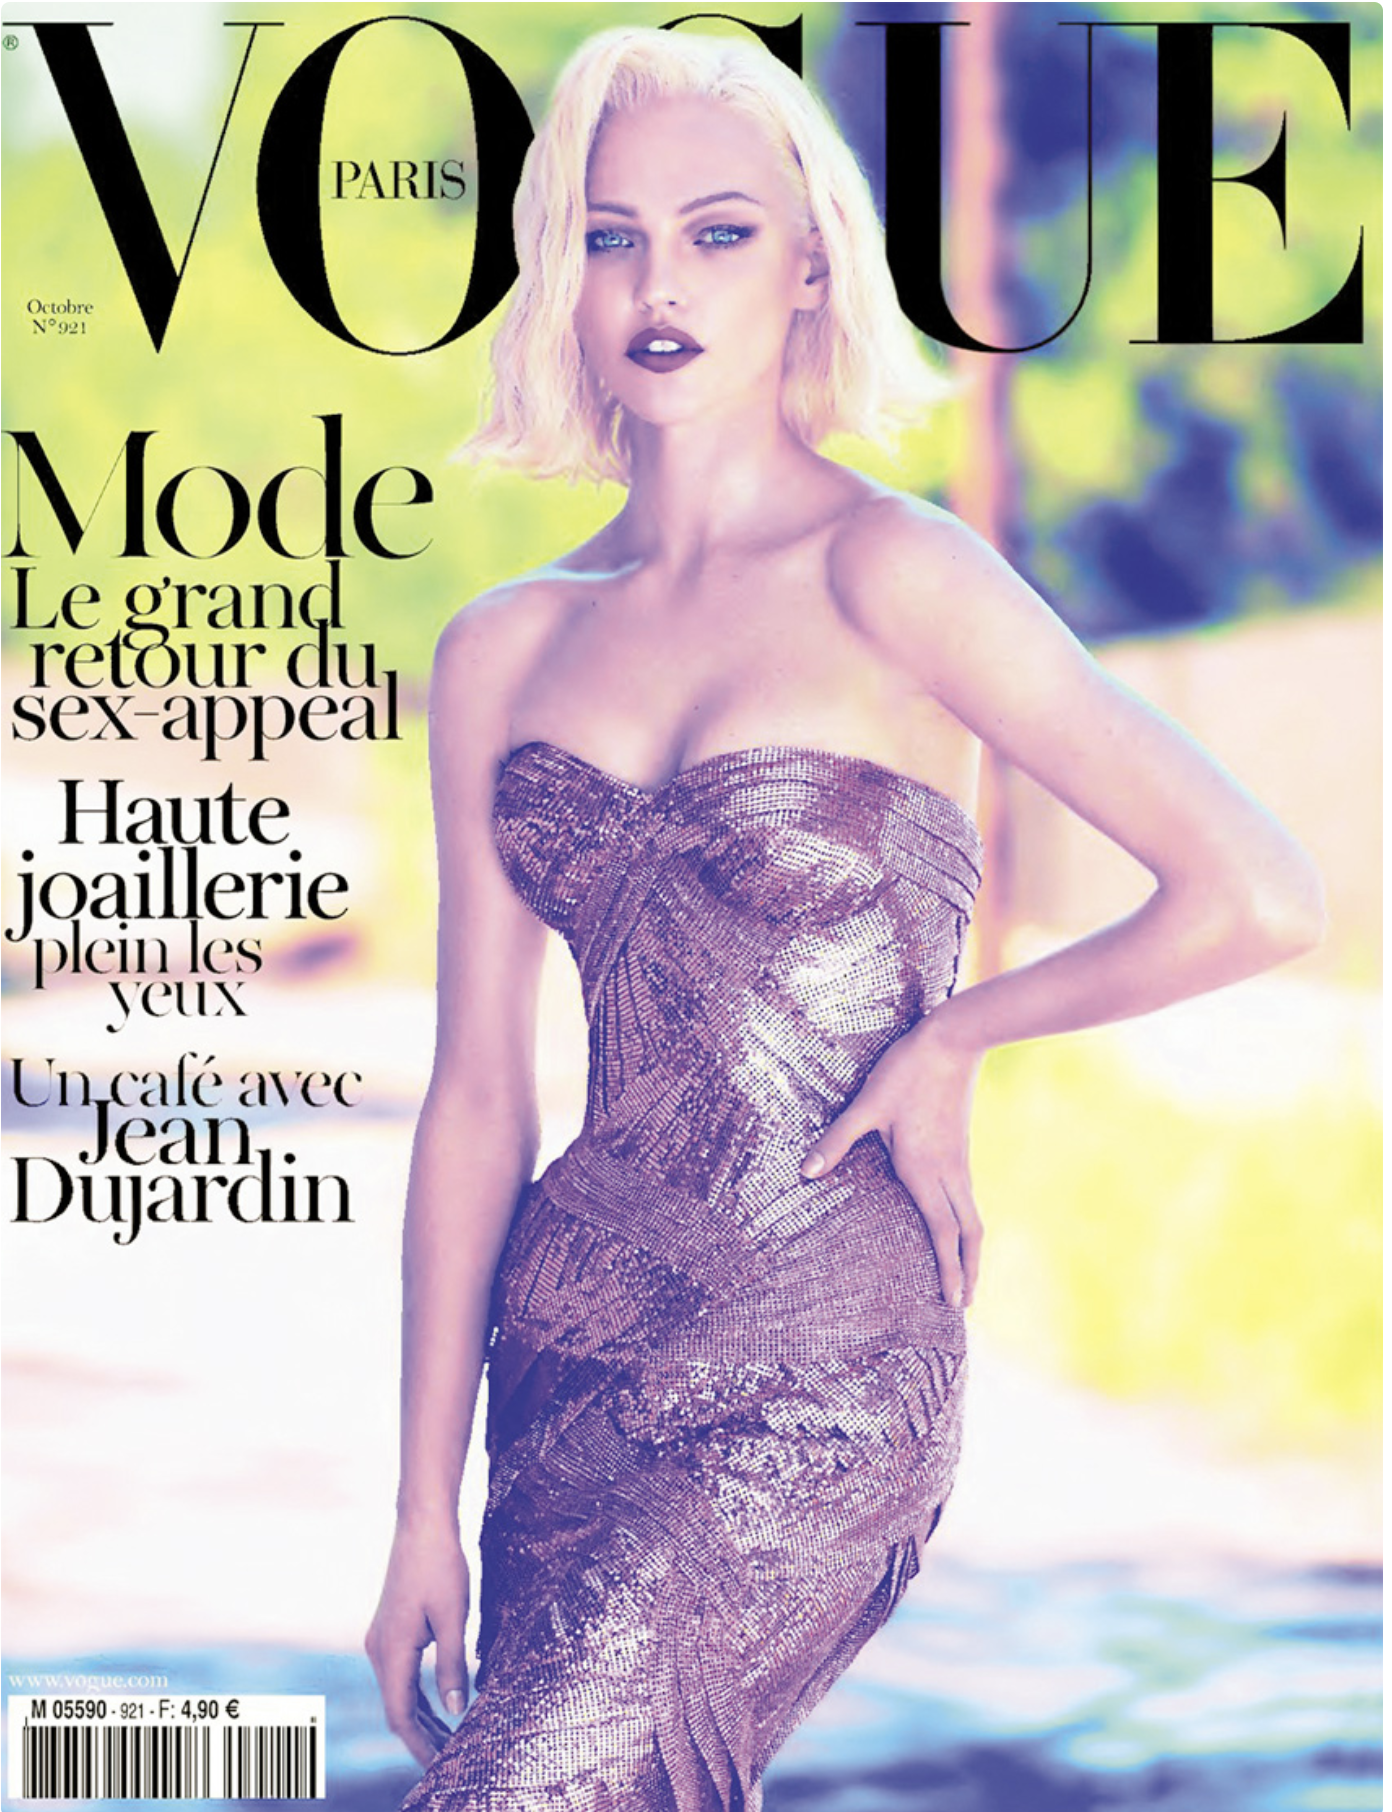 Mert-Marcus-Vogue-Paris-October-2011-9.png